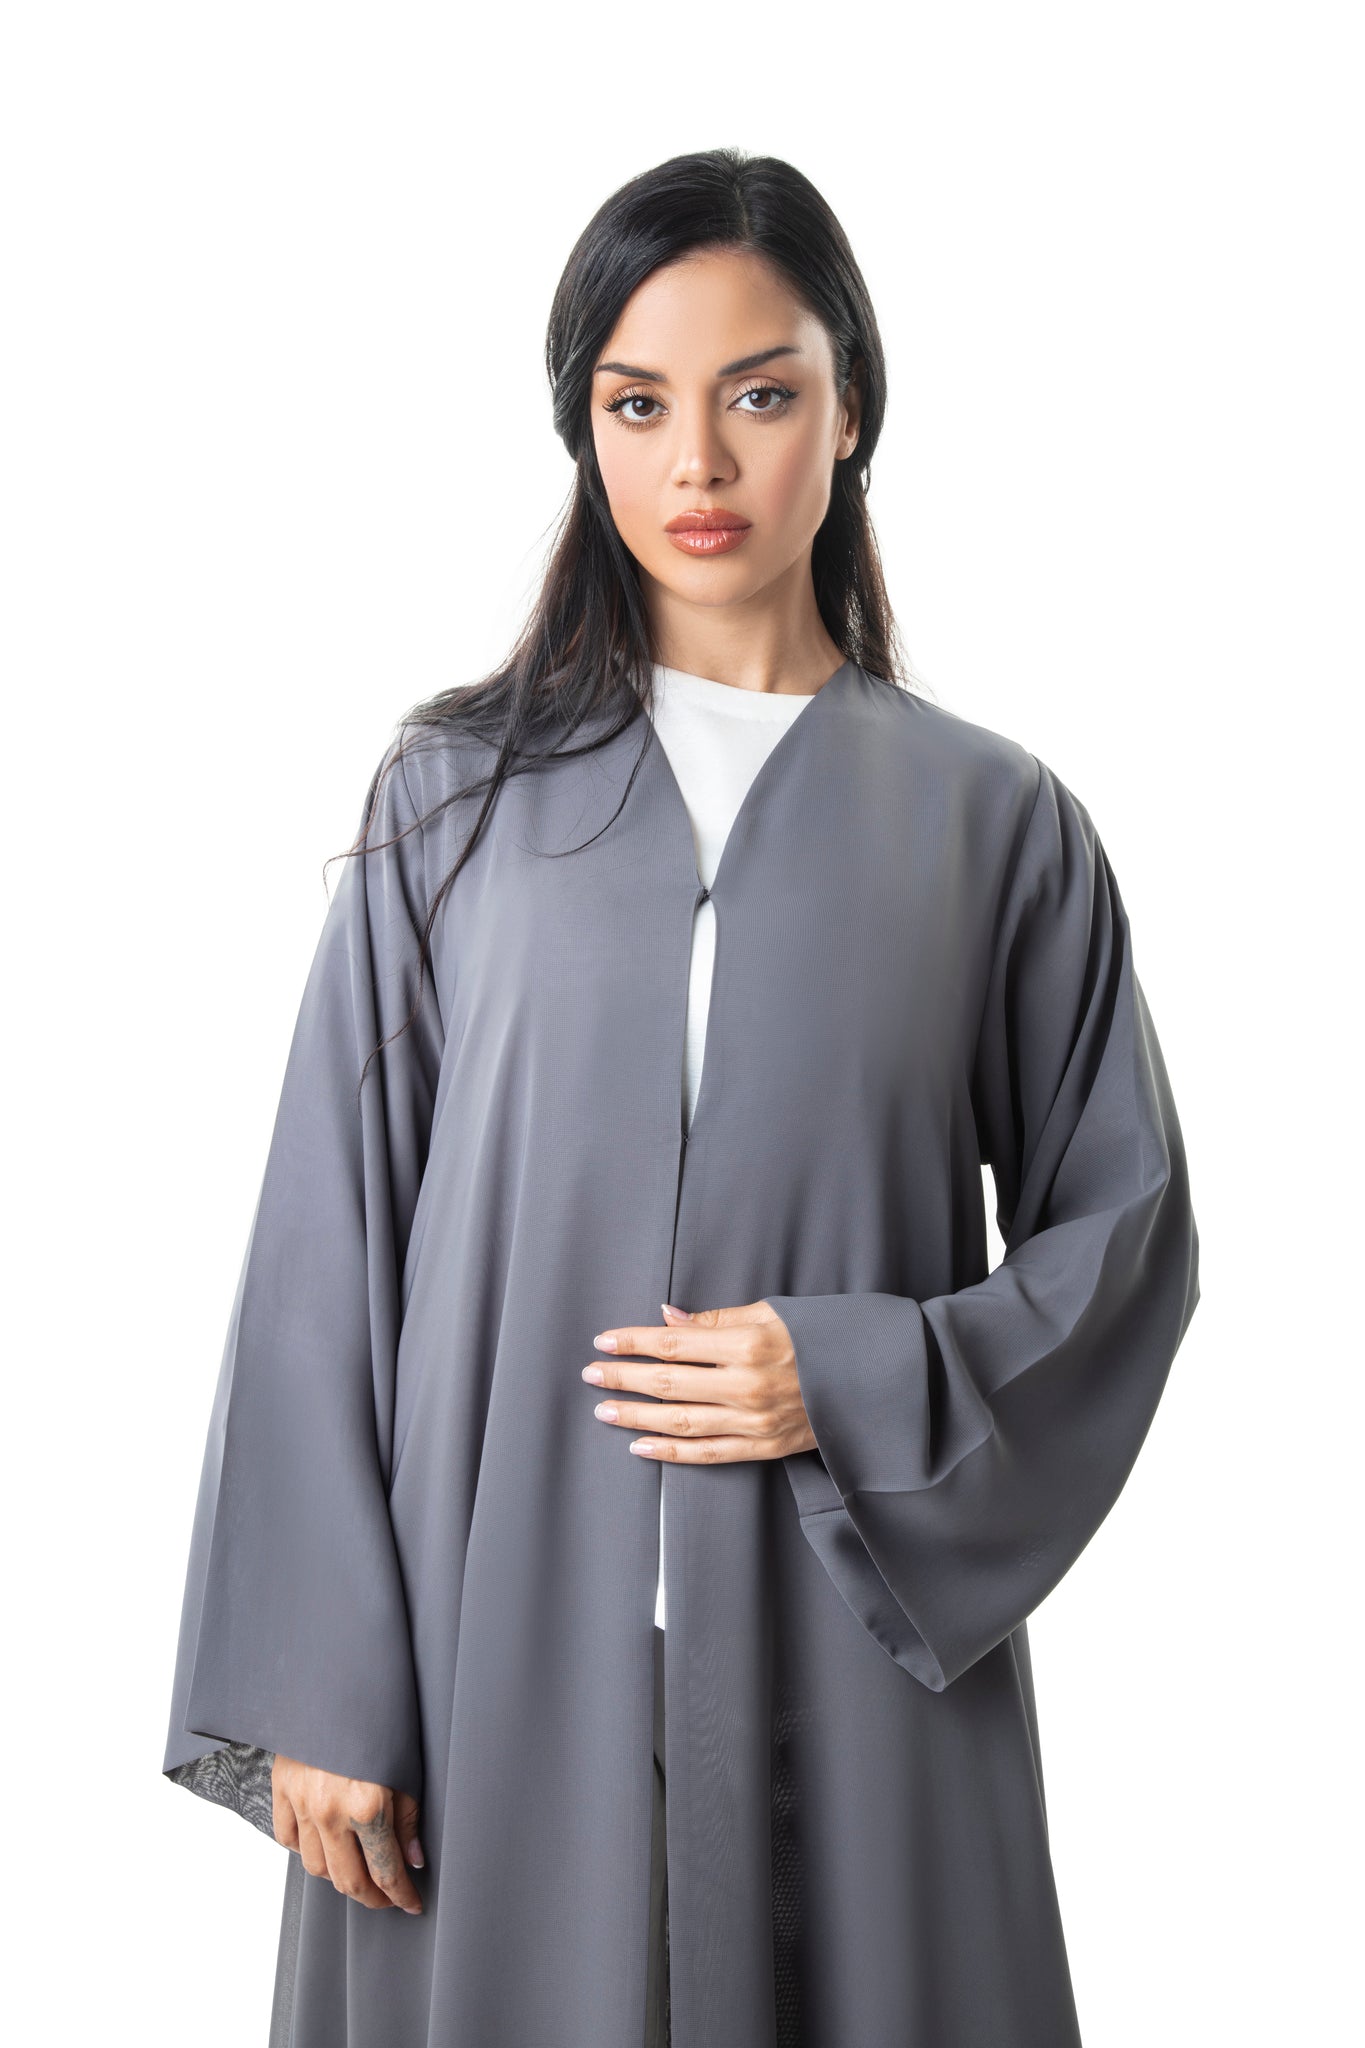 Buy Online Double Layered Chiffon Abaya In Gray, Luxury Abaya UAE